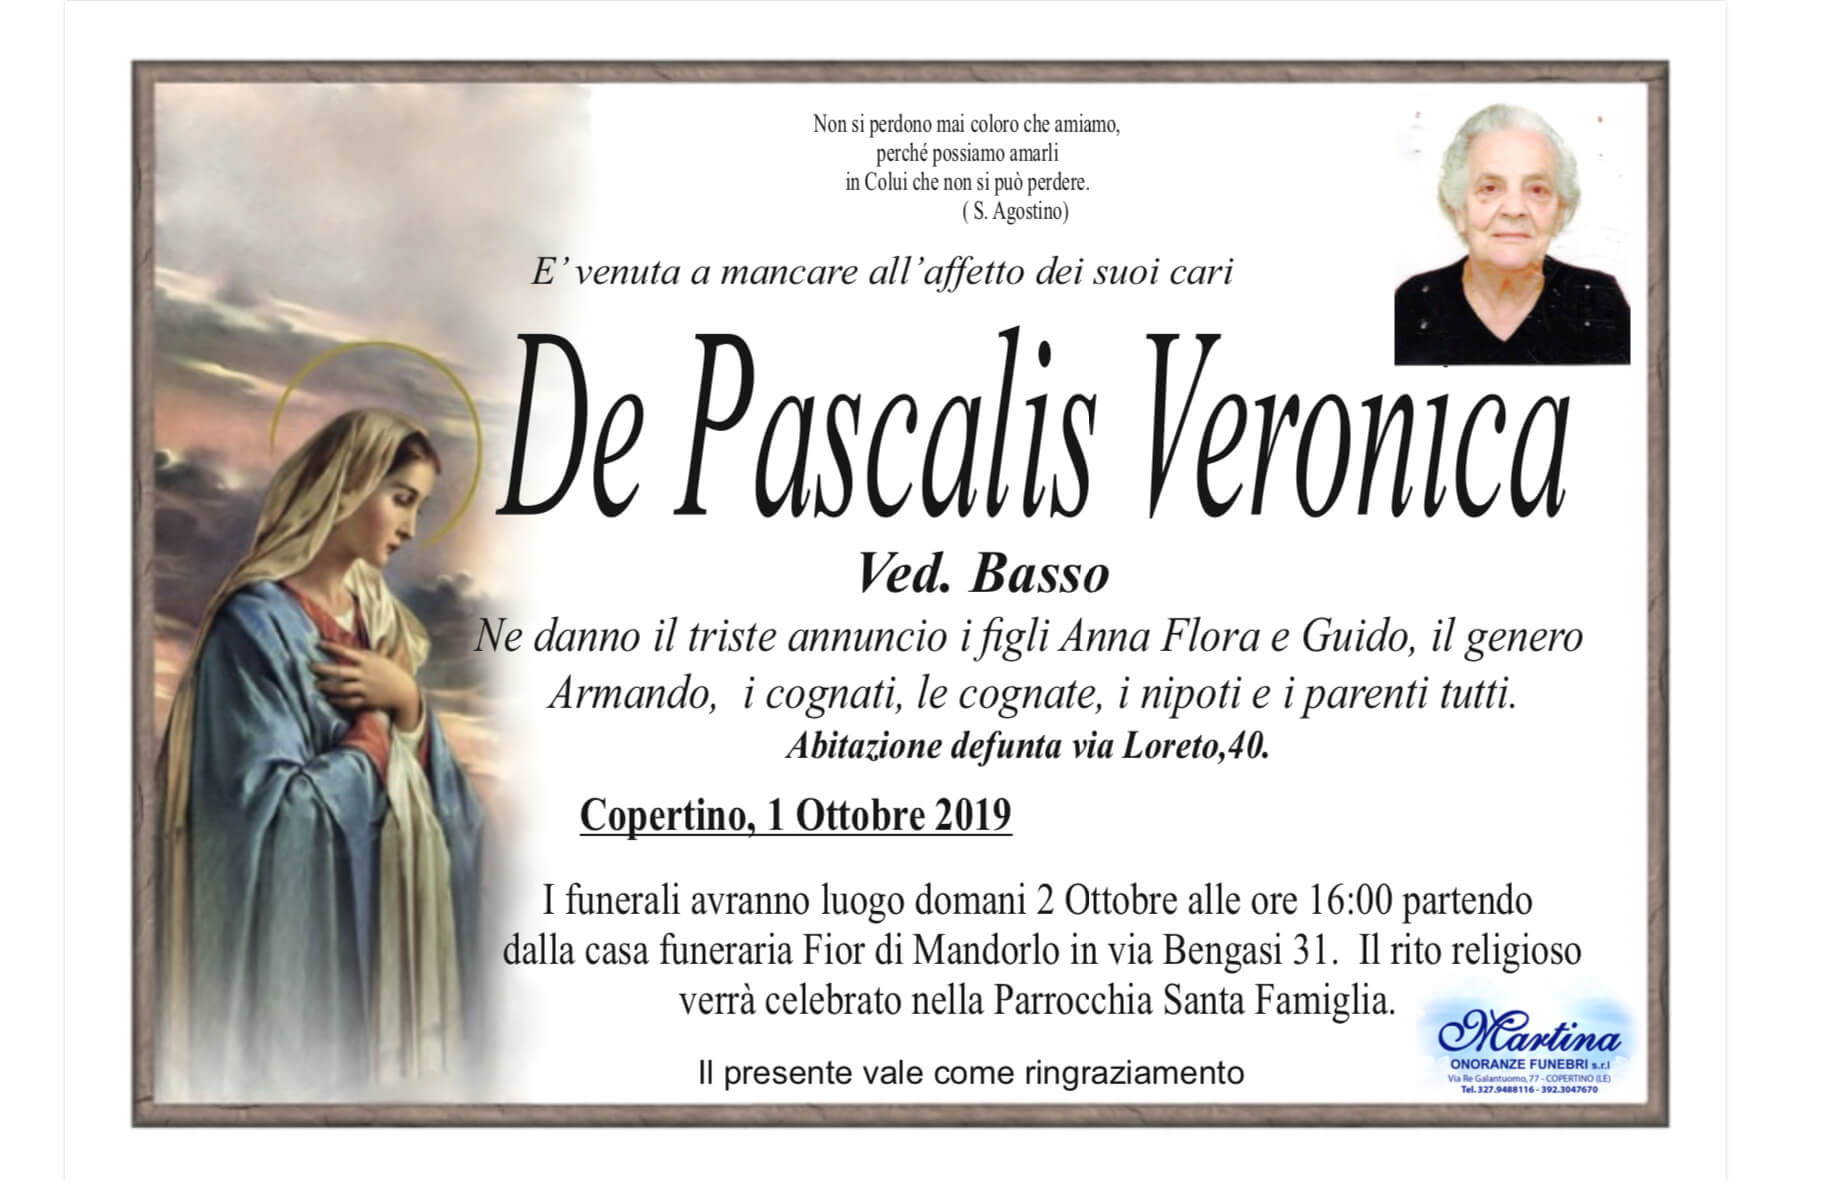 Veronica De Pascalis